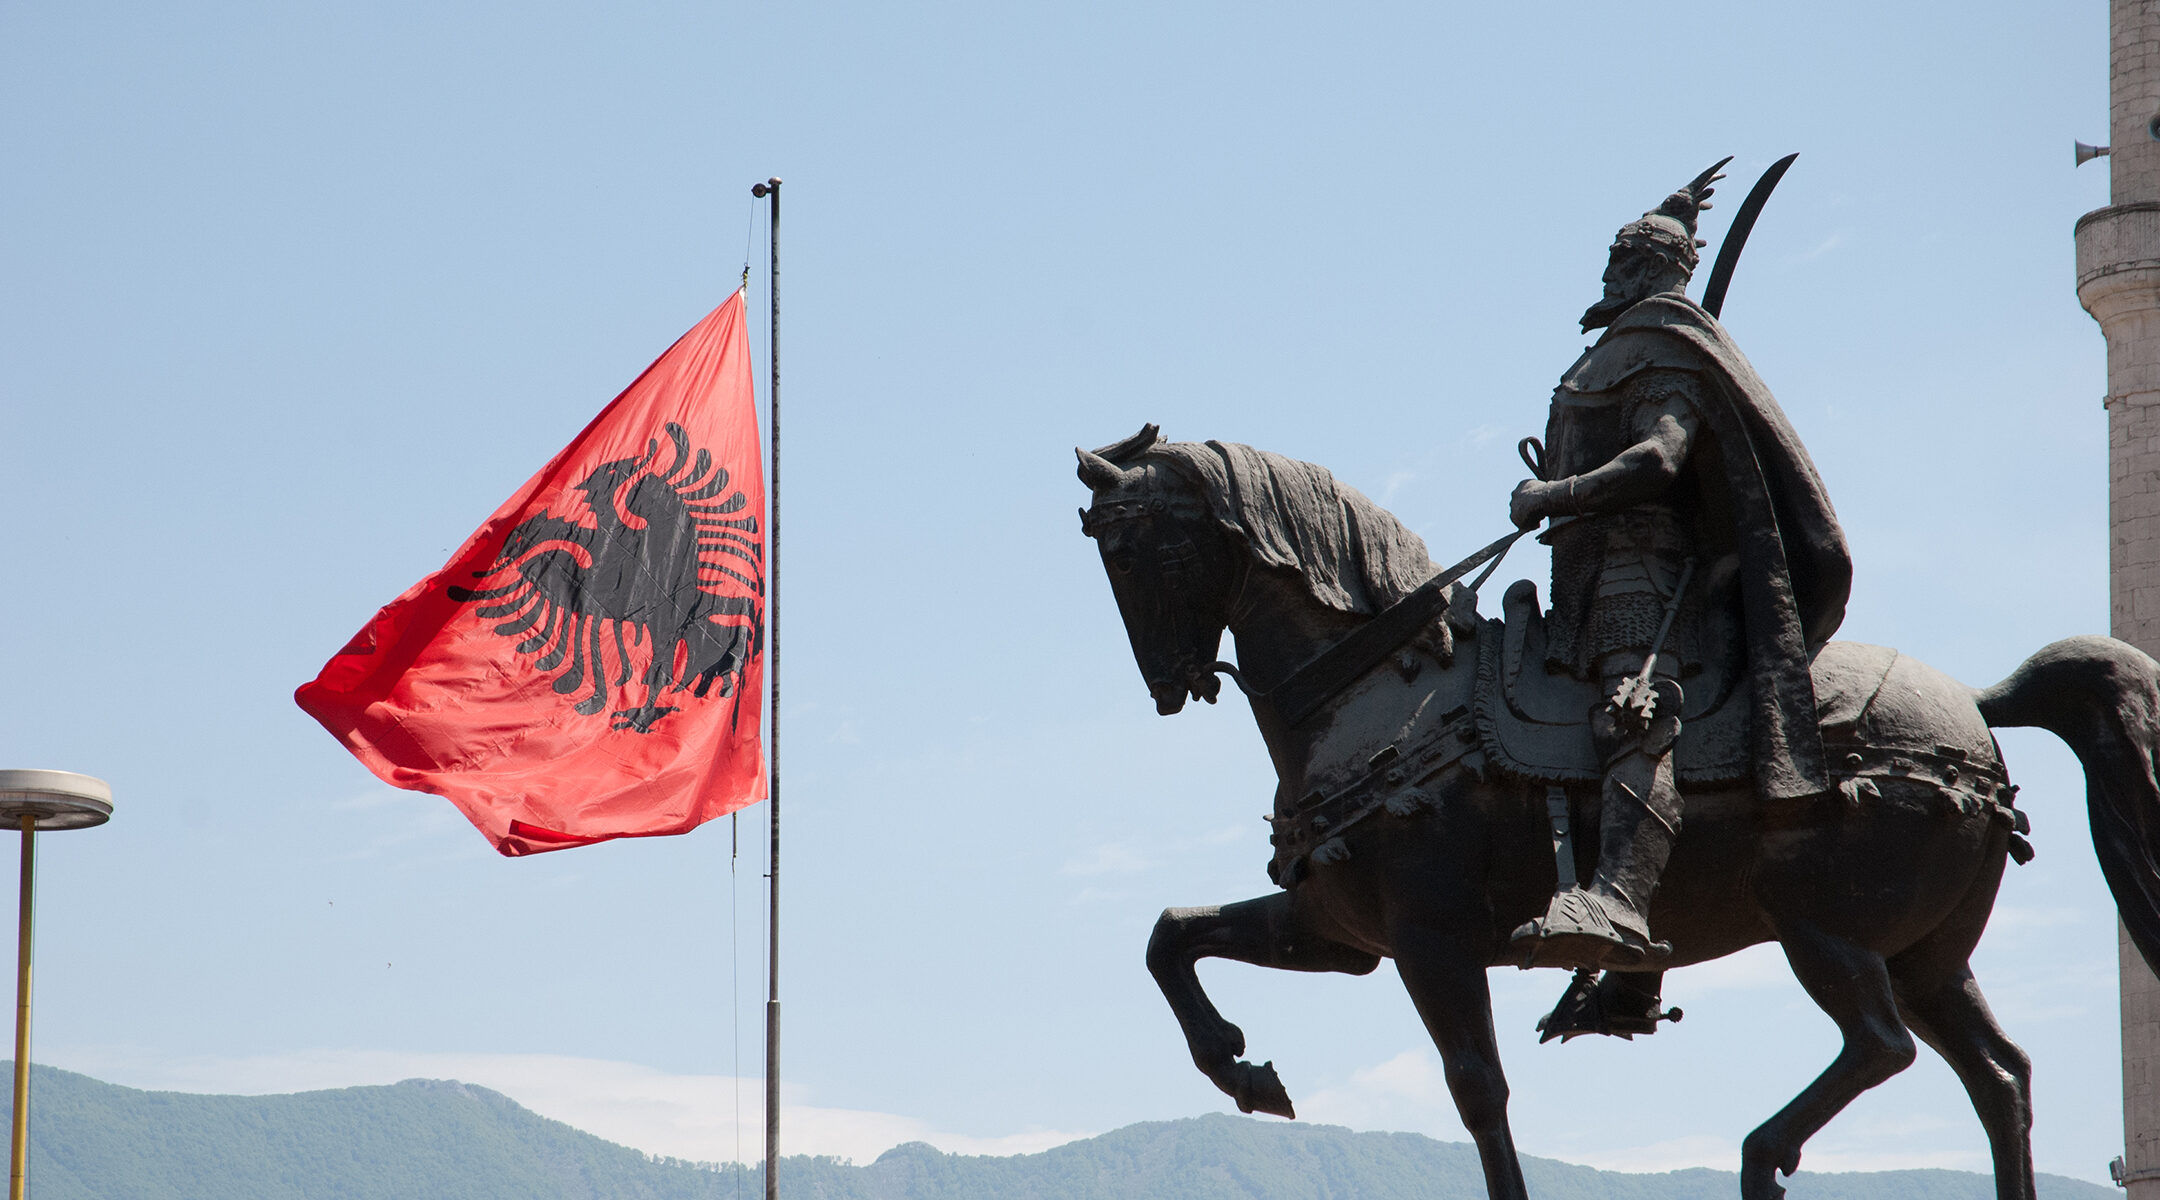 The Albanian flag flies over Skanderbeg Square in Tirana, Albania on May 12, 2010. (Flickr/Thomas Quine)